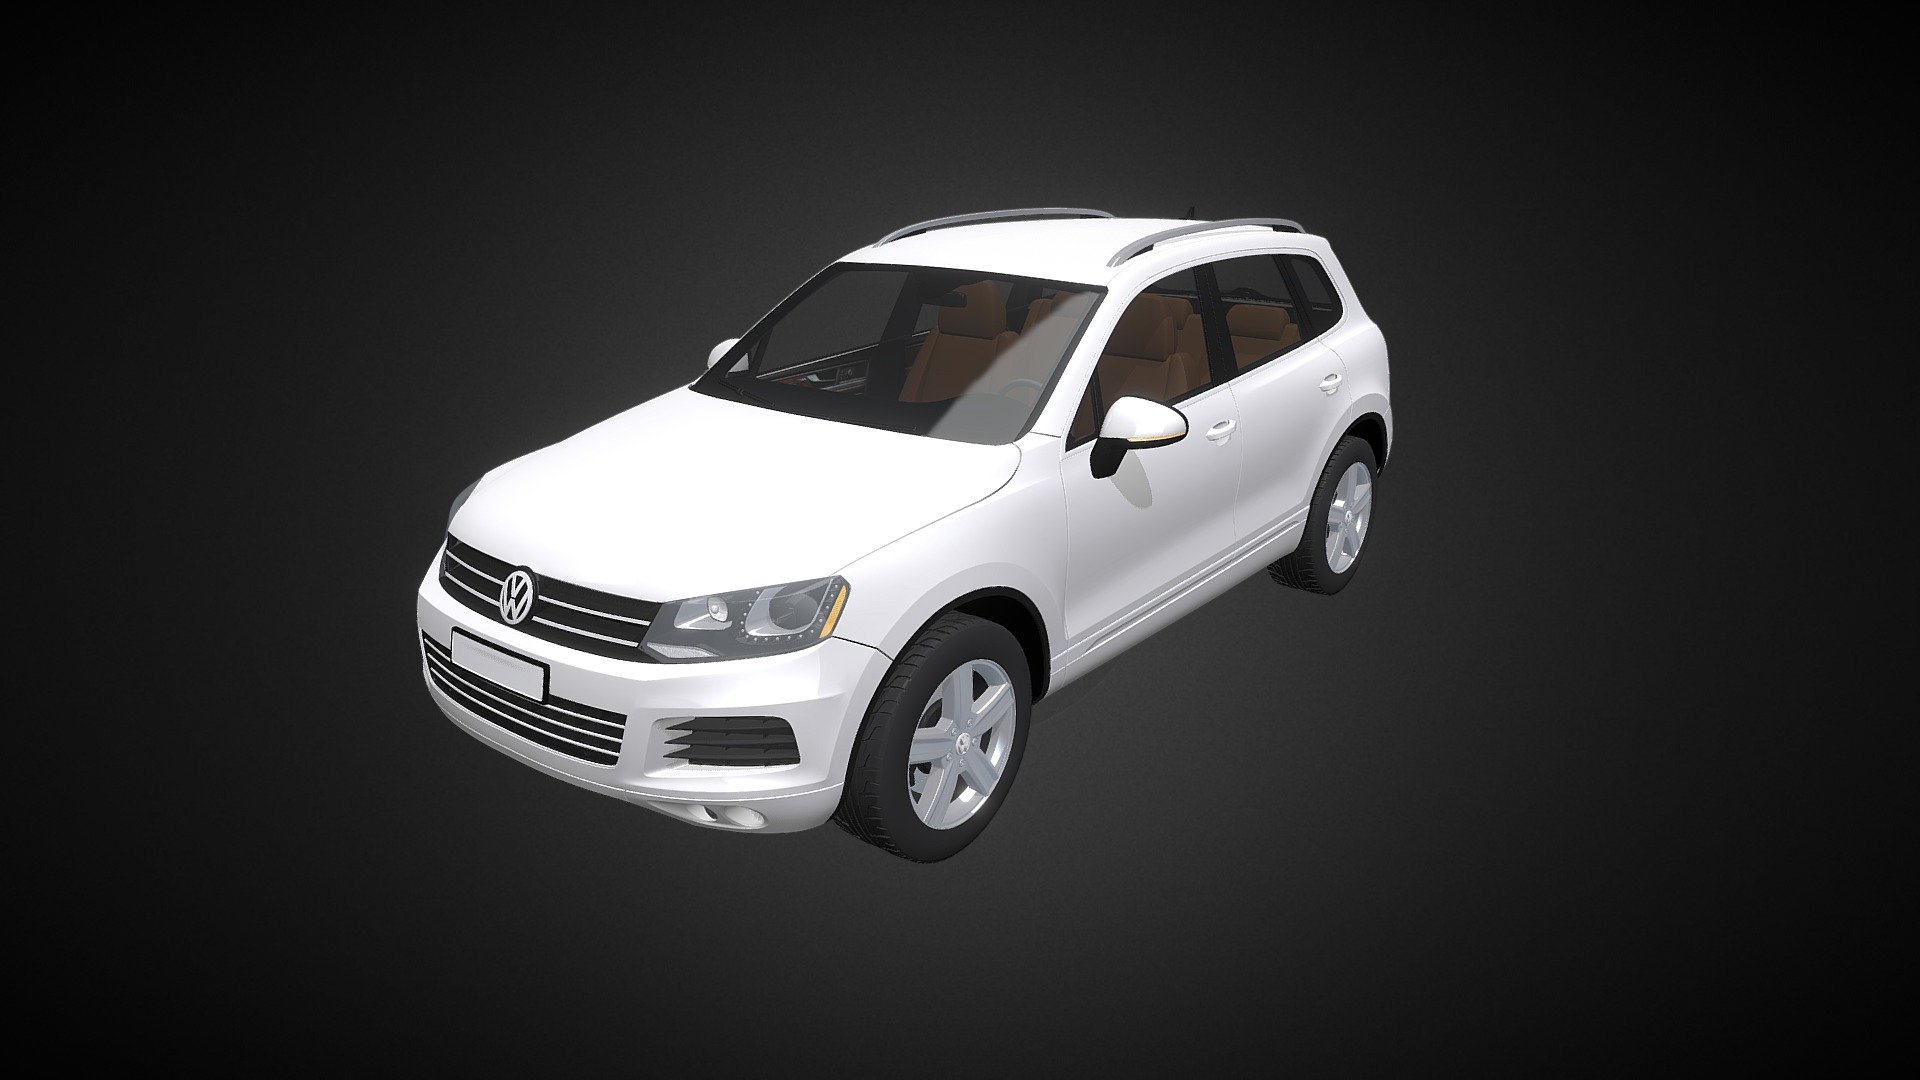 high poly test - model by squir.com - VW Touareg 2011 - 3D model by tobu 3d model